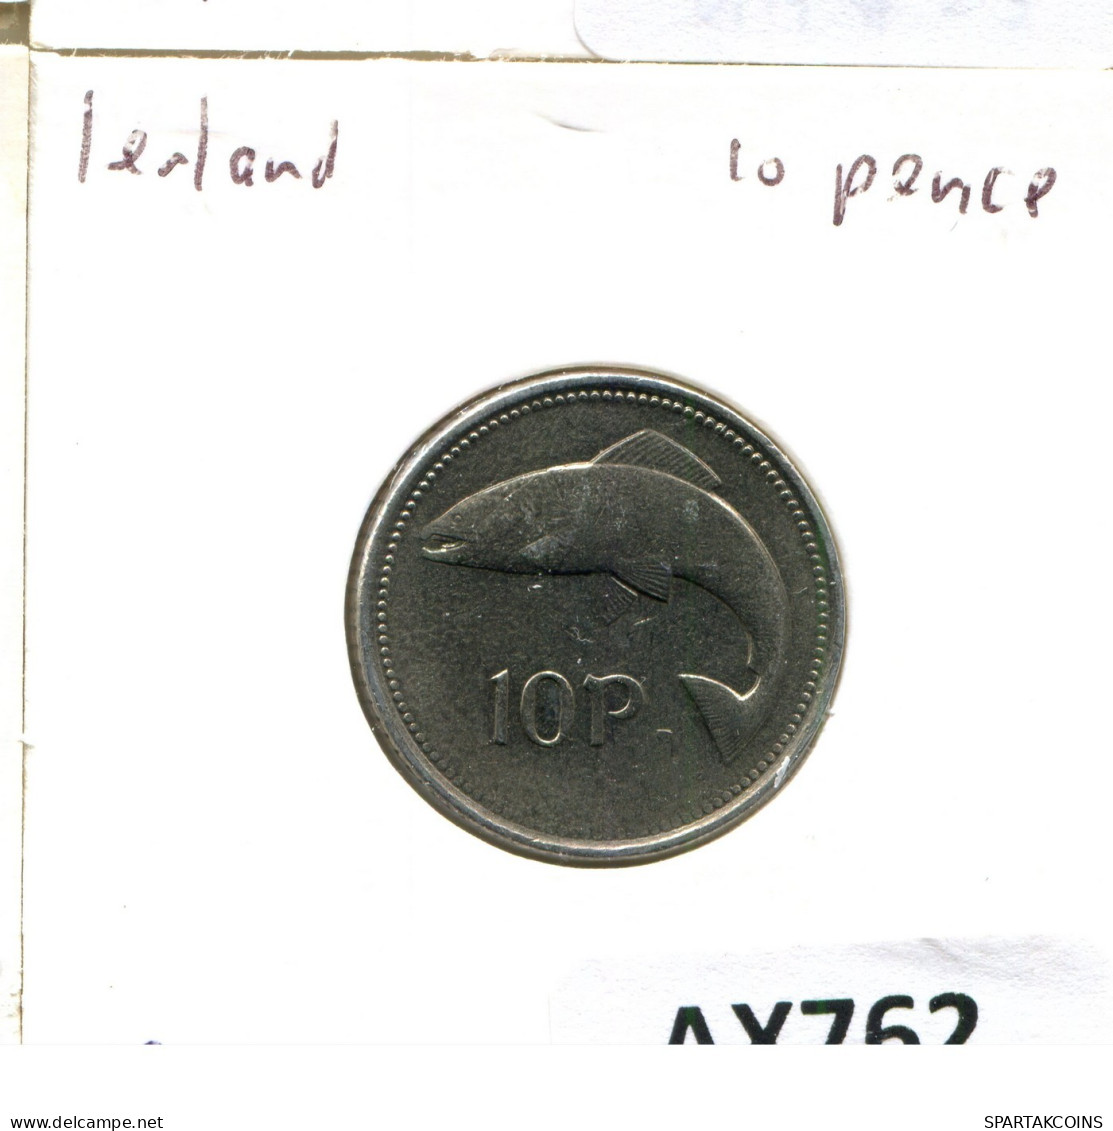 10 PENCE 1993 IRELAND Coin #AX762.U.A - Ireland